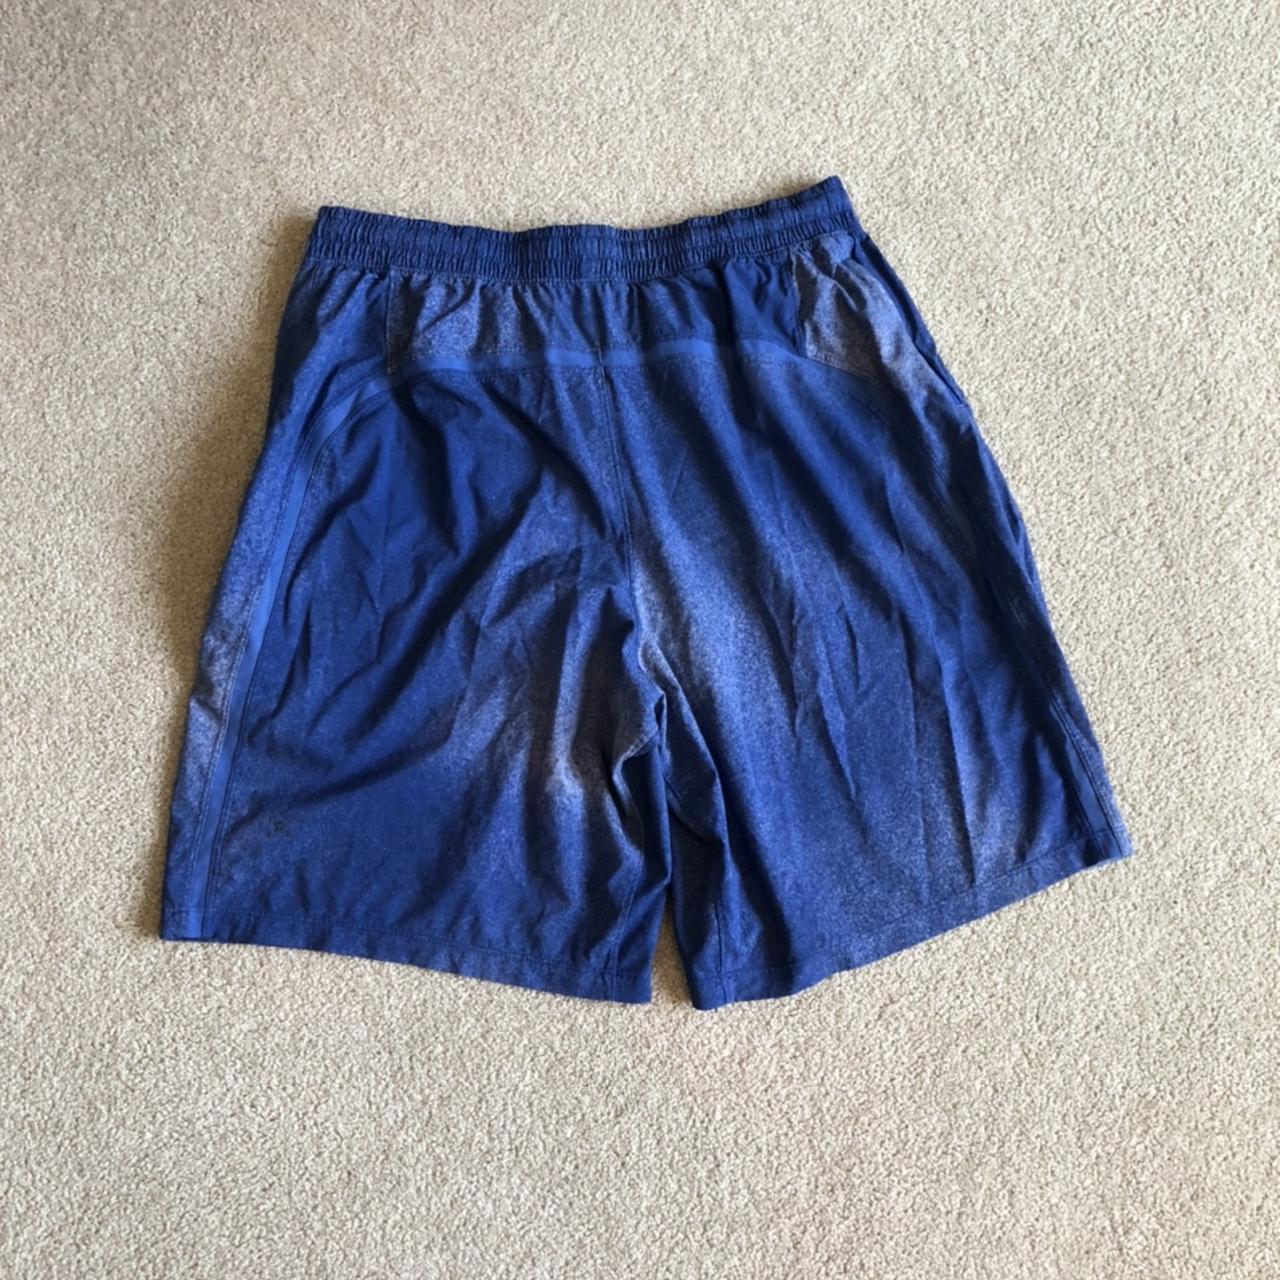 Lululemon Surge Shorts. Men's Large. Check - Depop